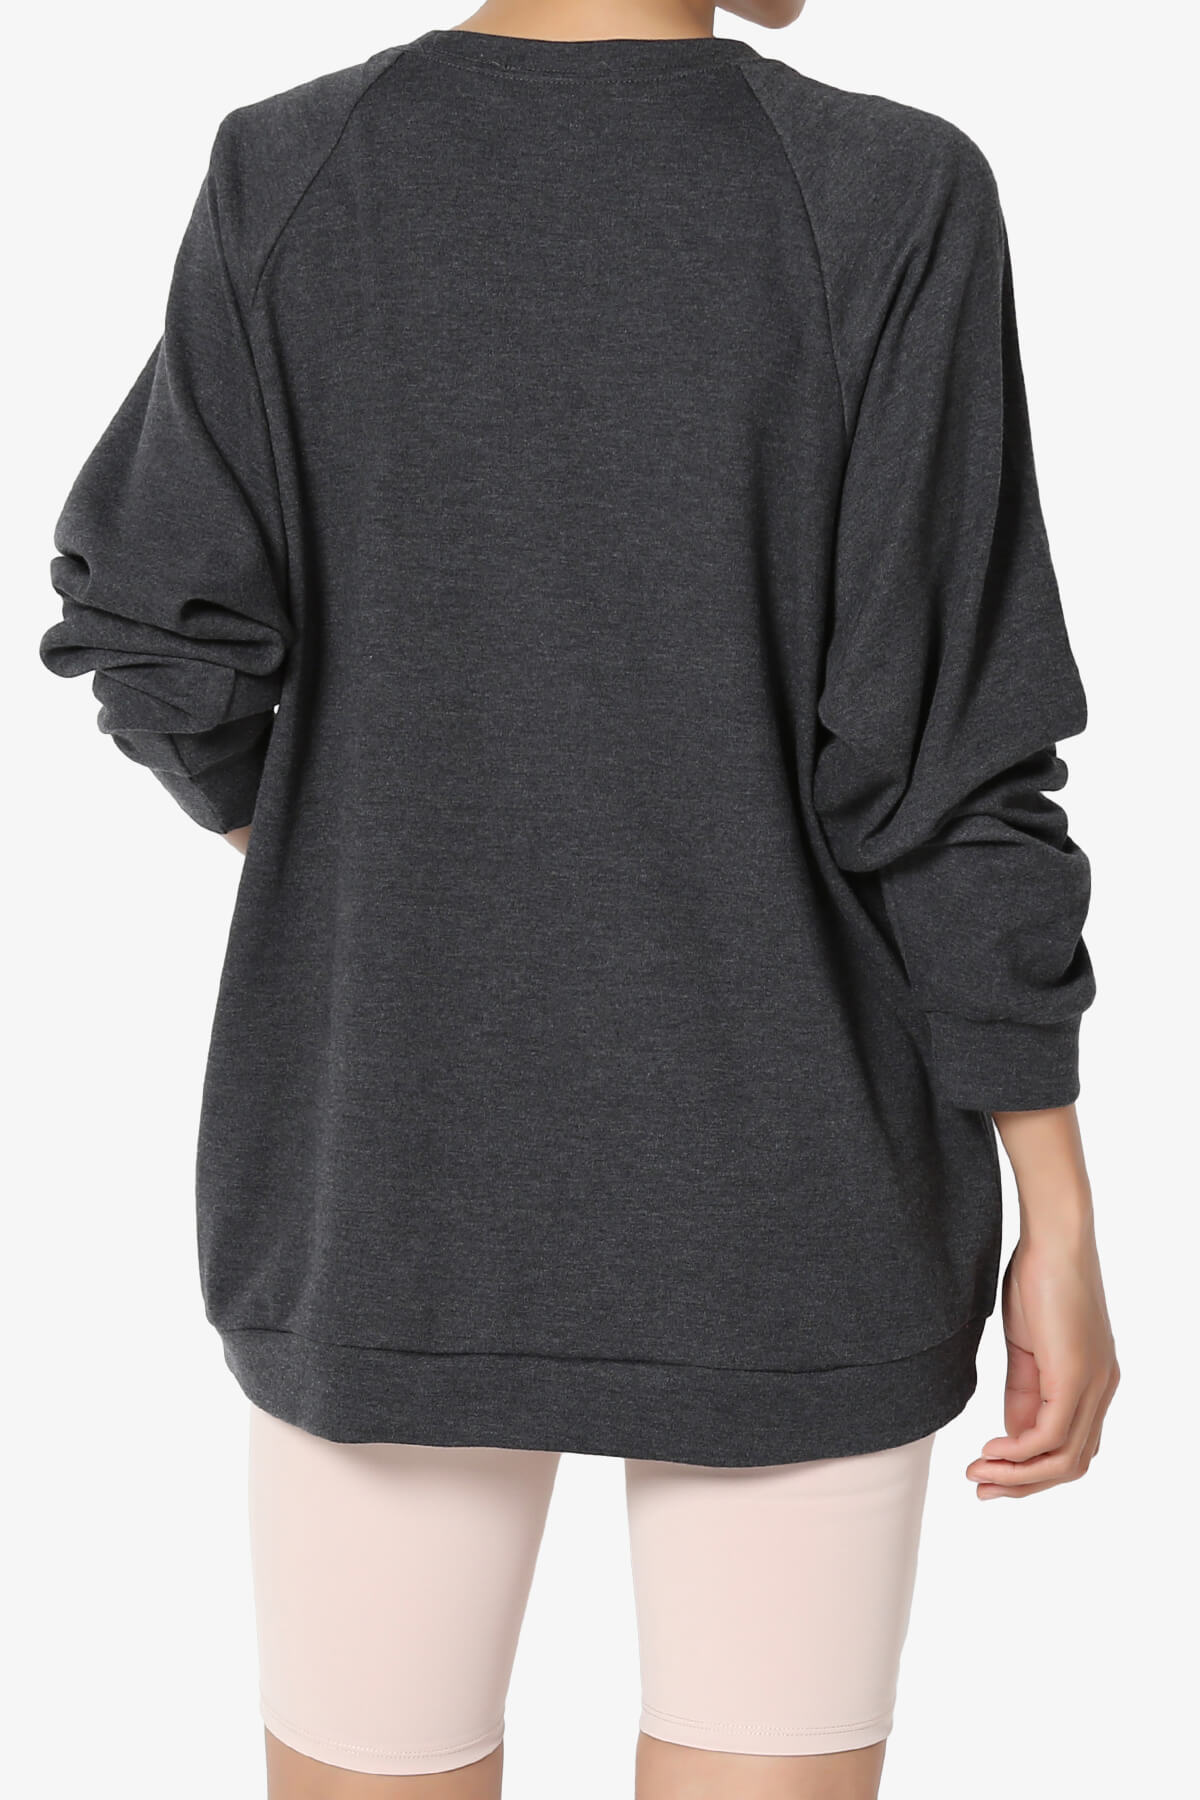 Carlene Cotton Raglan Sleeve Pullover Top CHARCOAL_2